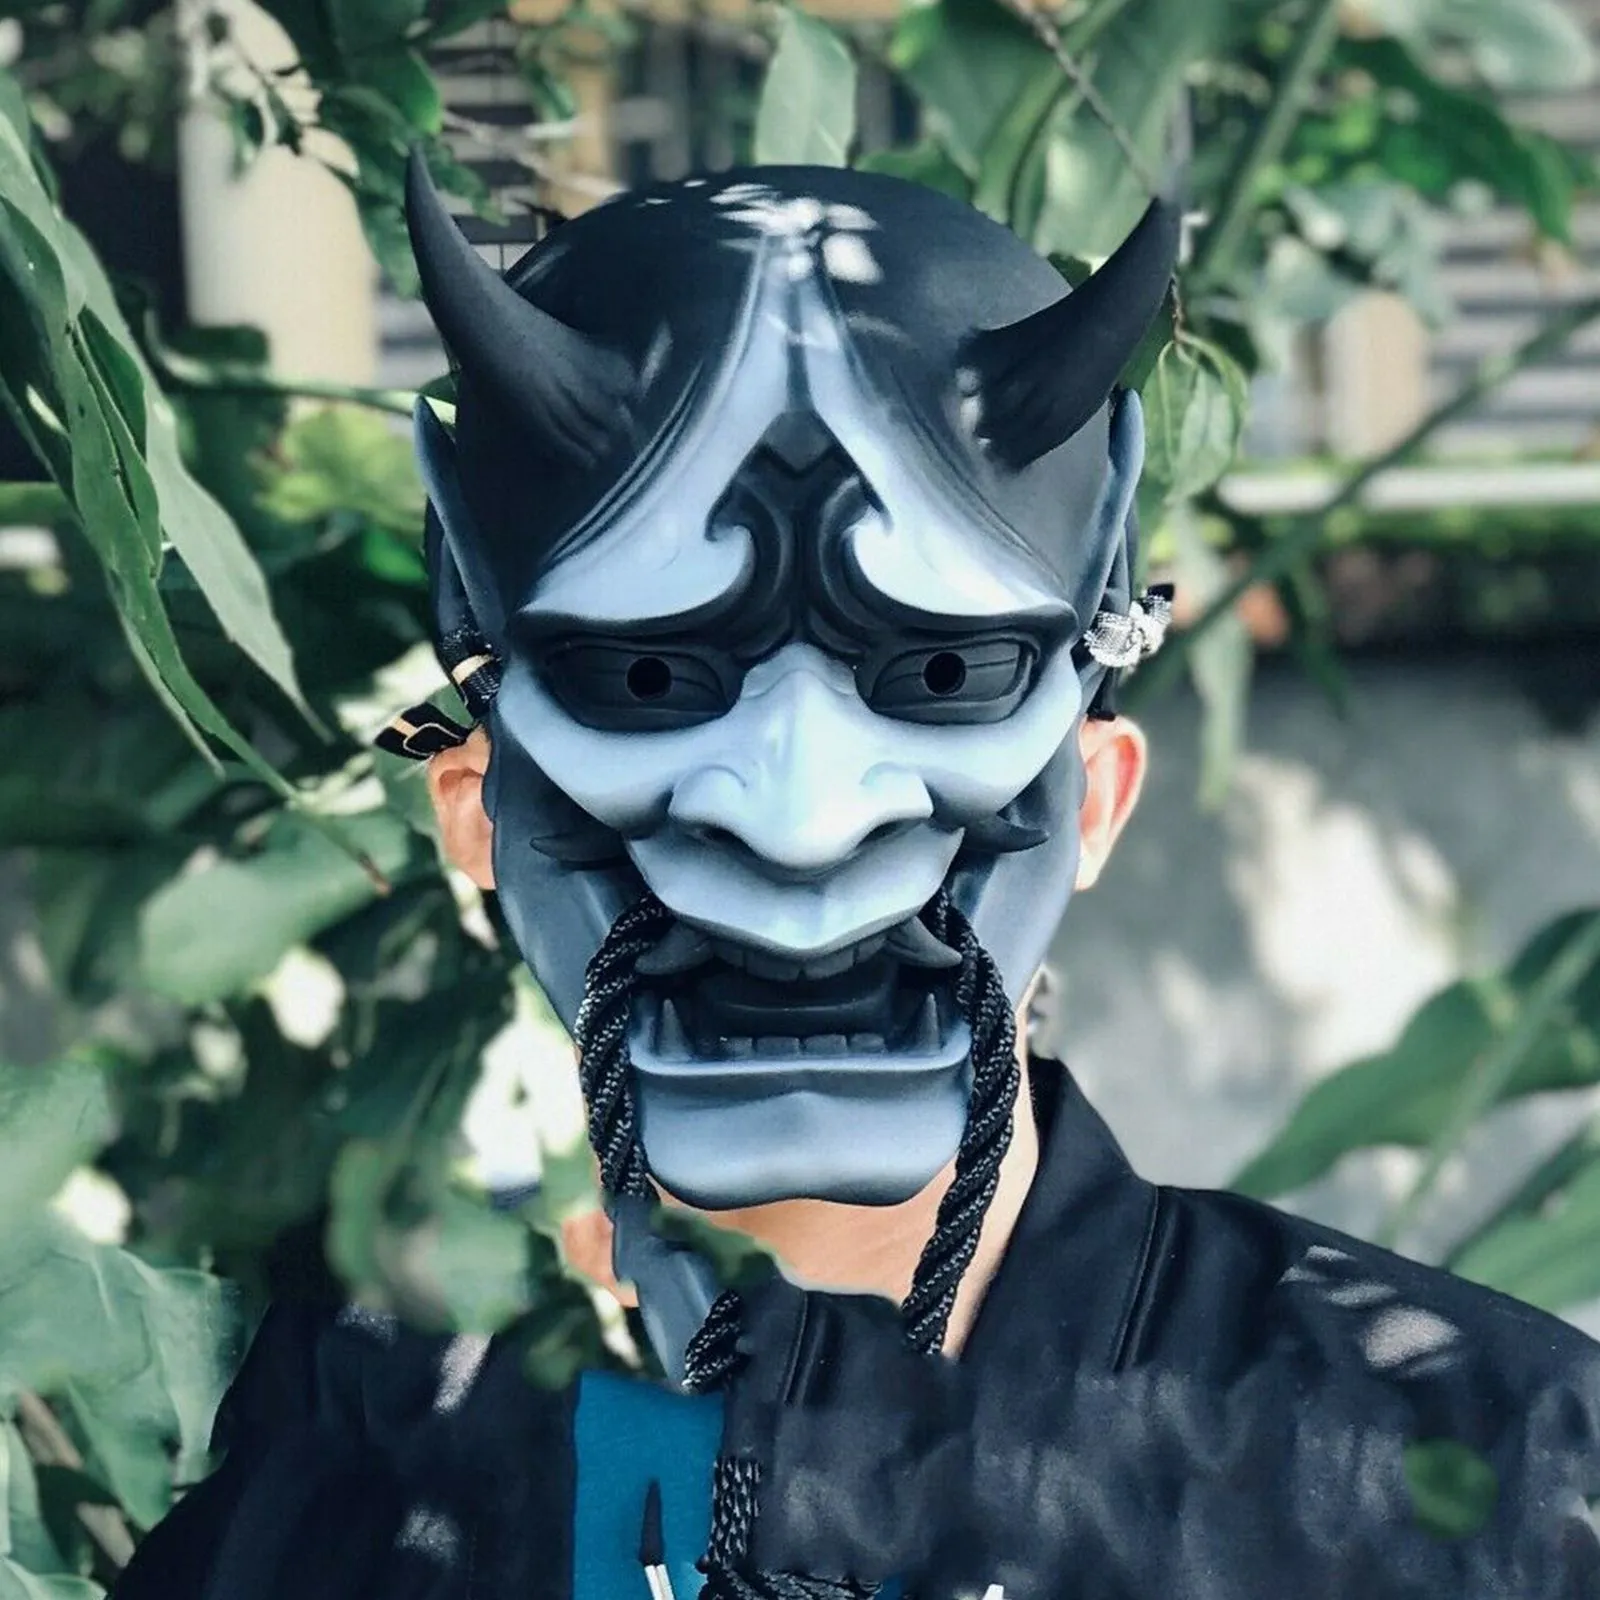 The Devil Adult Full Face Mask